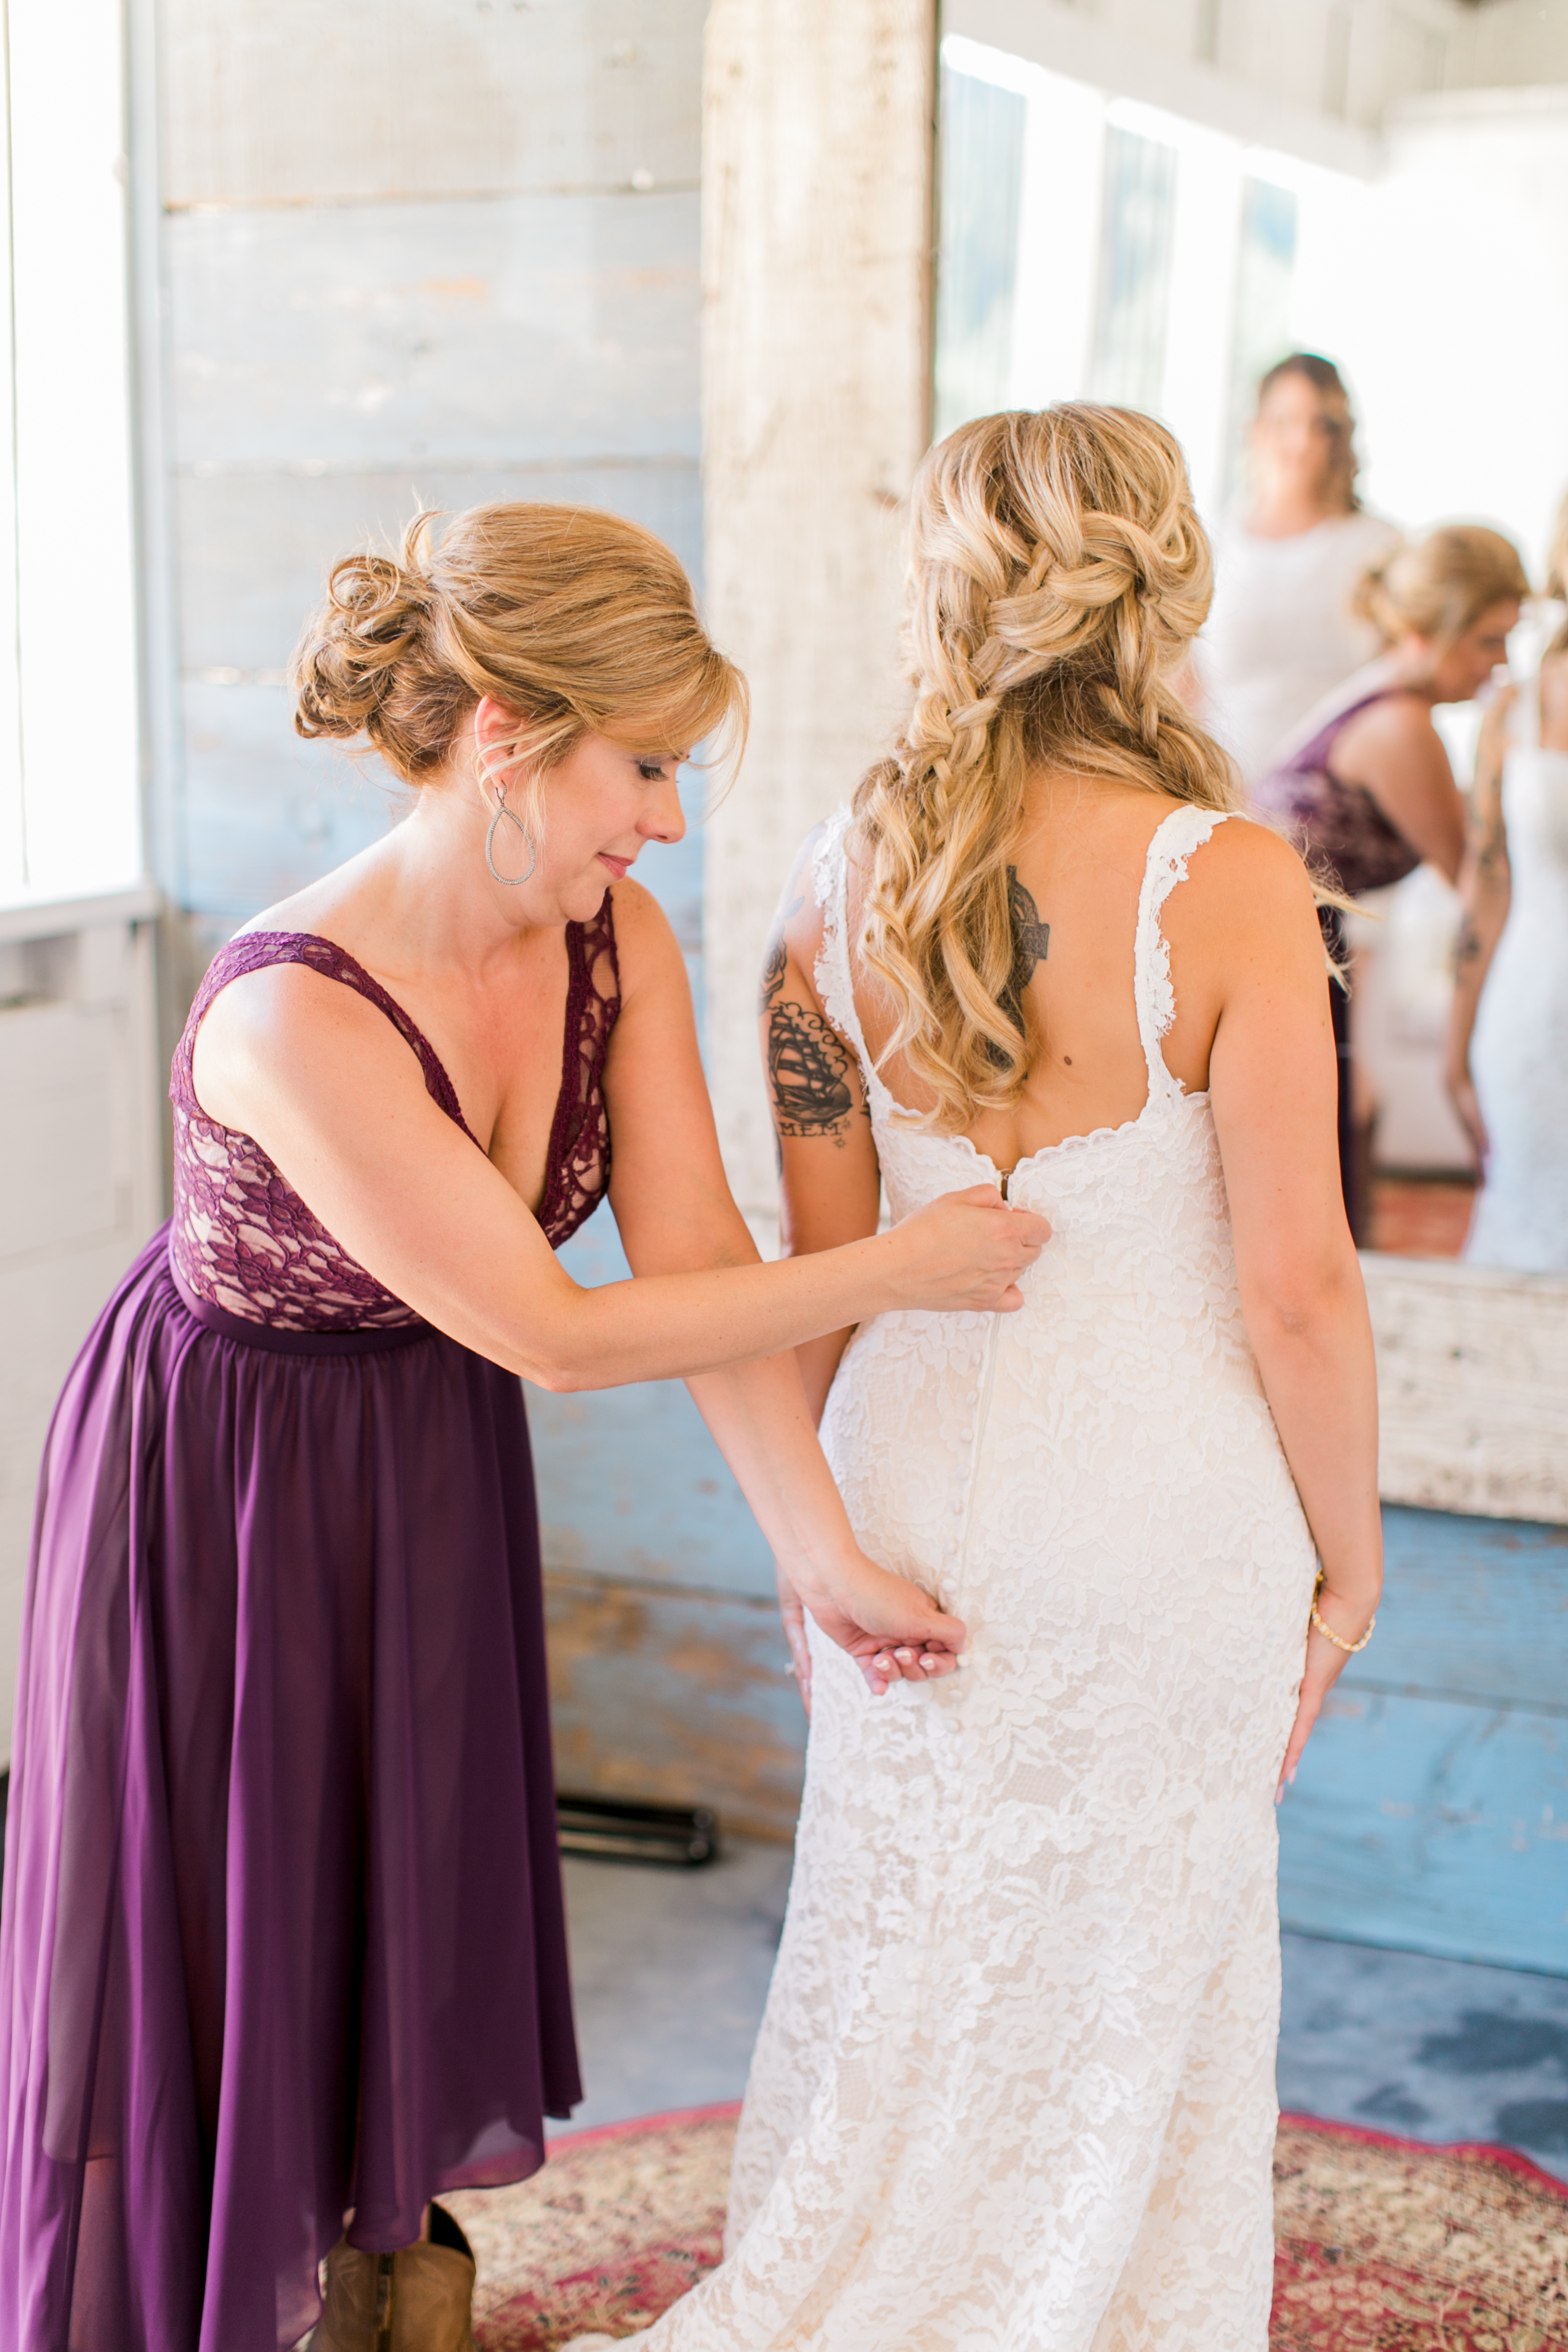 Mom helping bride zip up wedding dress